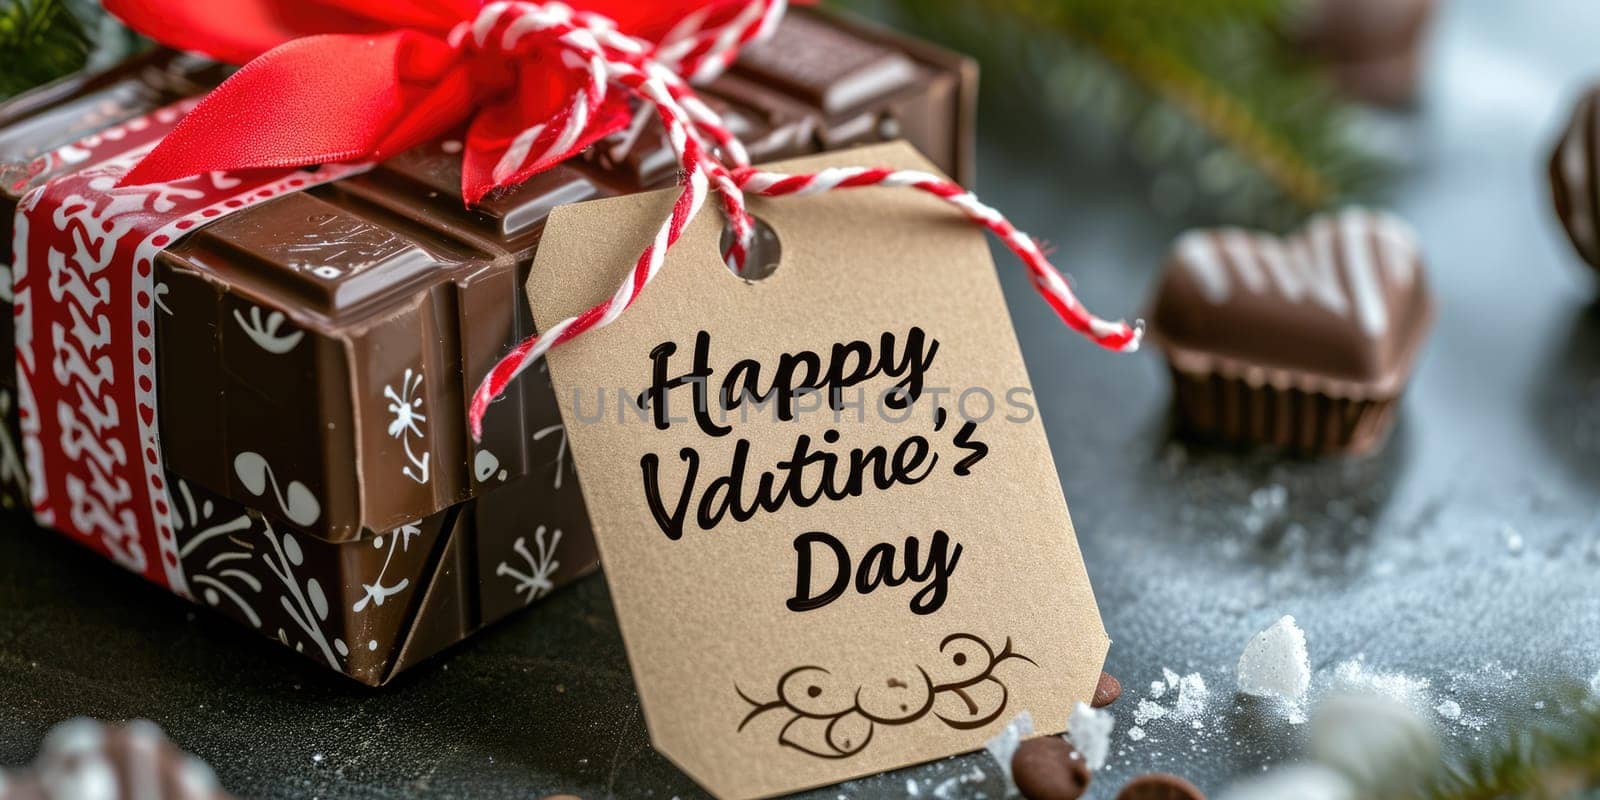 valentine chocolate for present on valentines day pragma by biancoblue